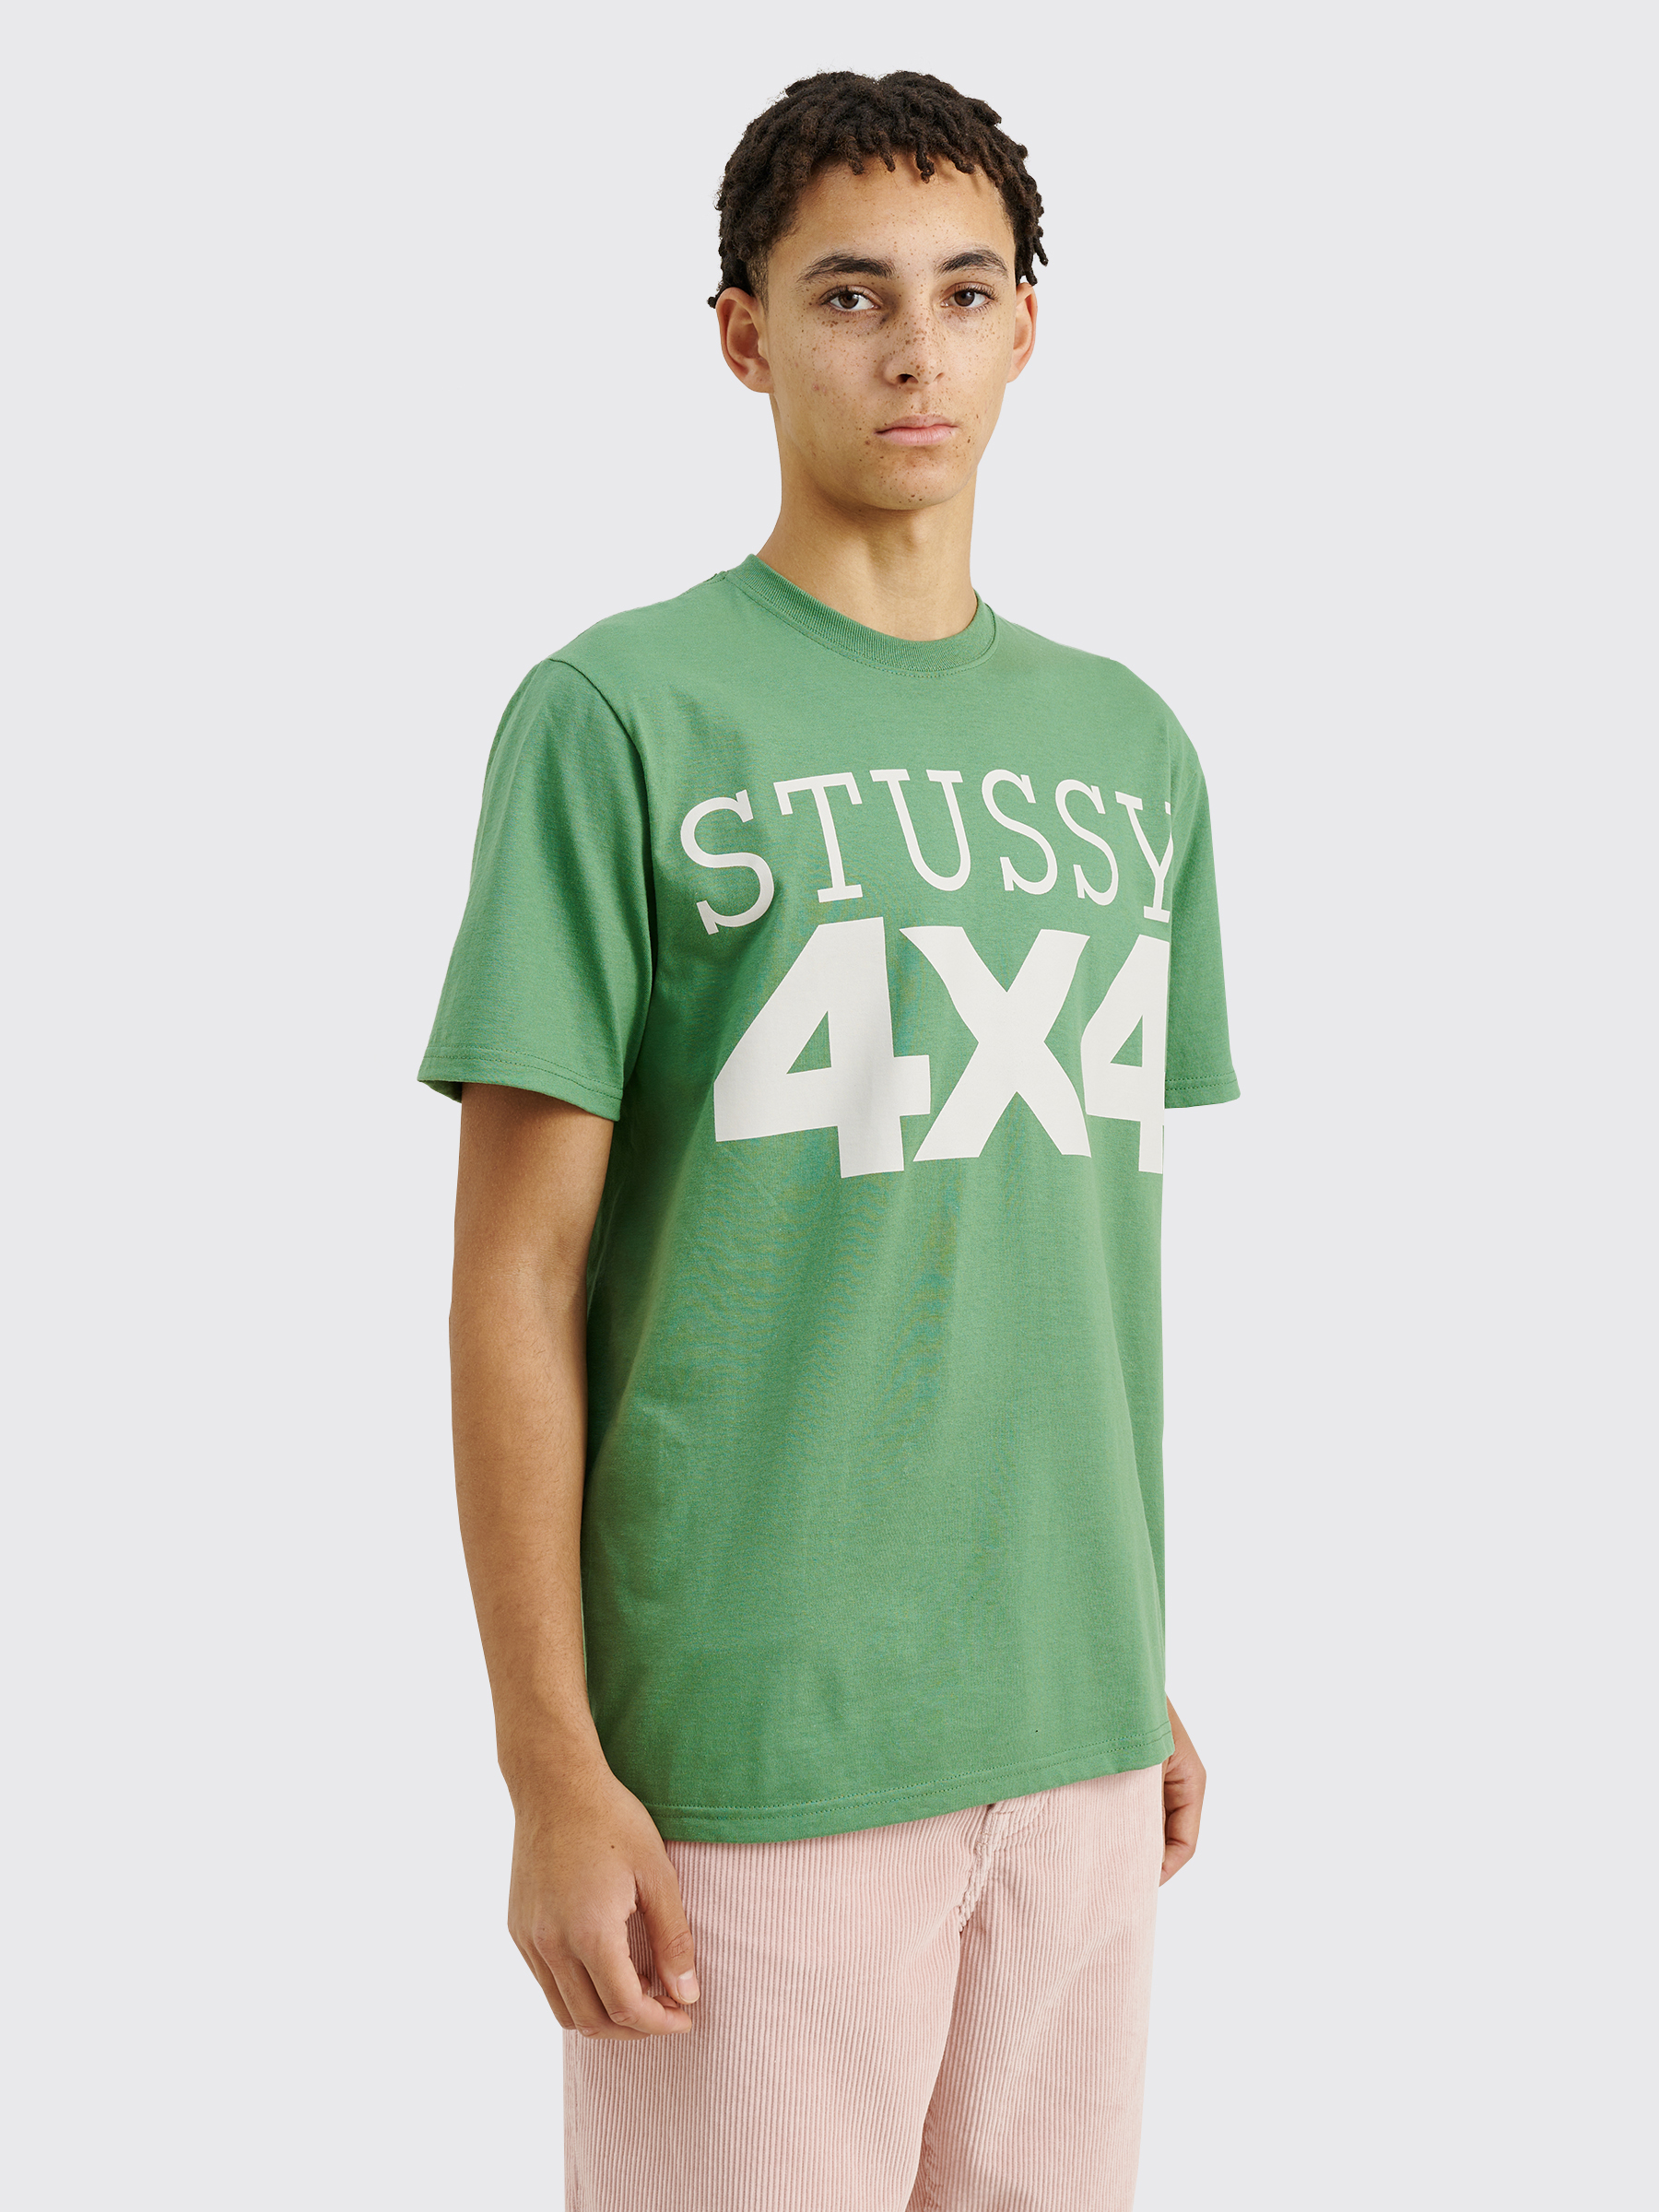 Très Bien - Stüssy 4x4 T-shirt Green